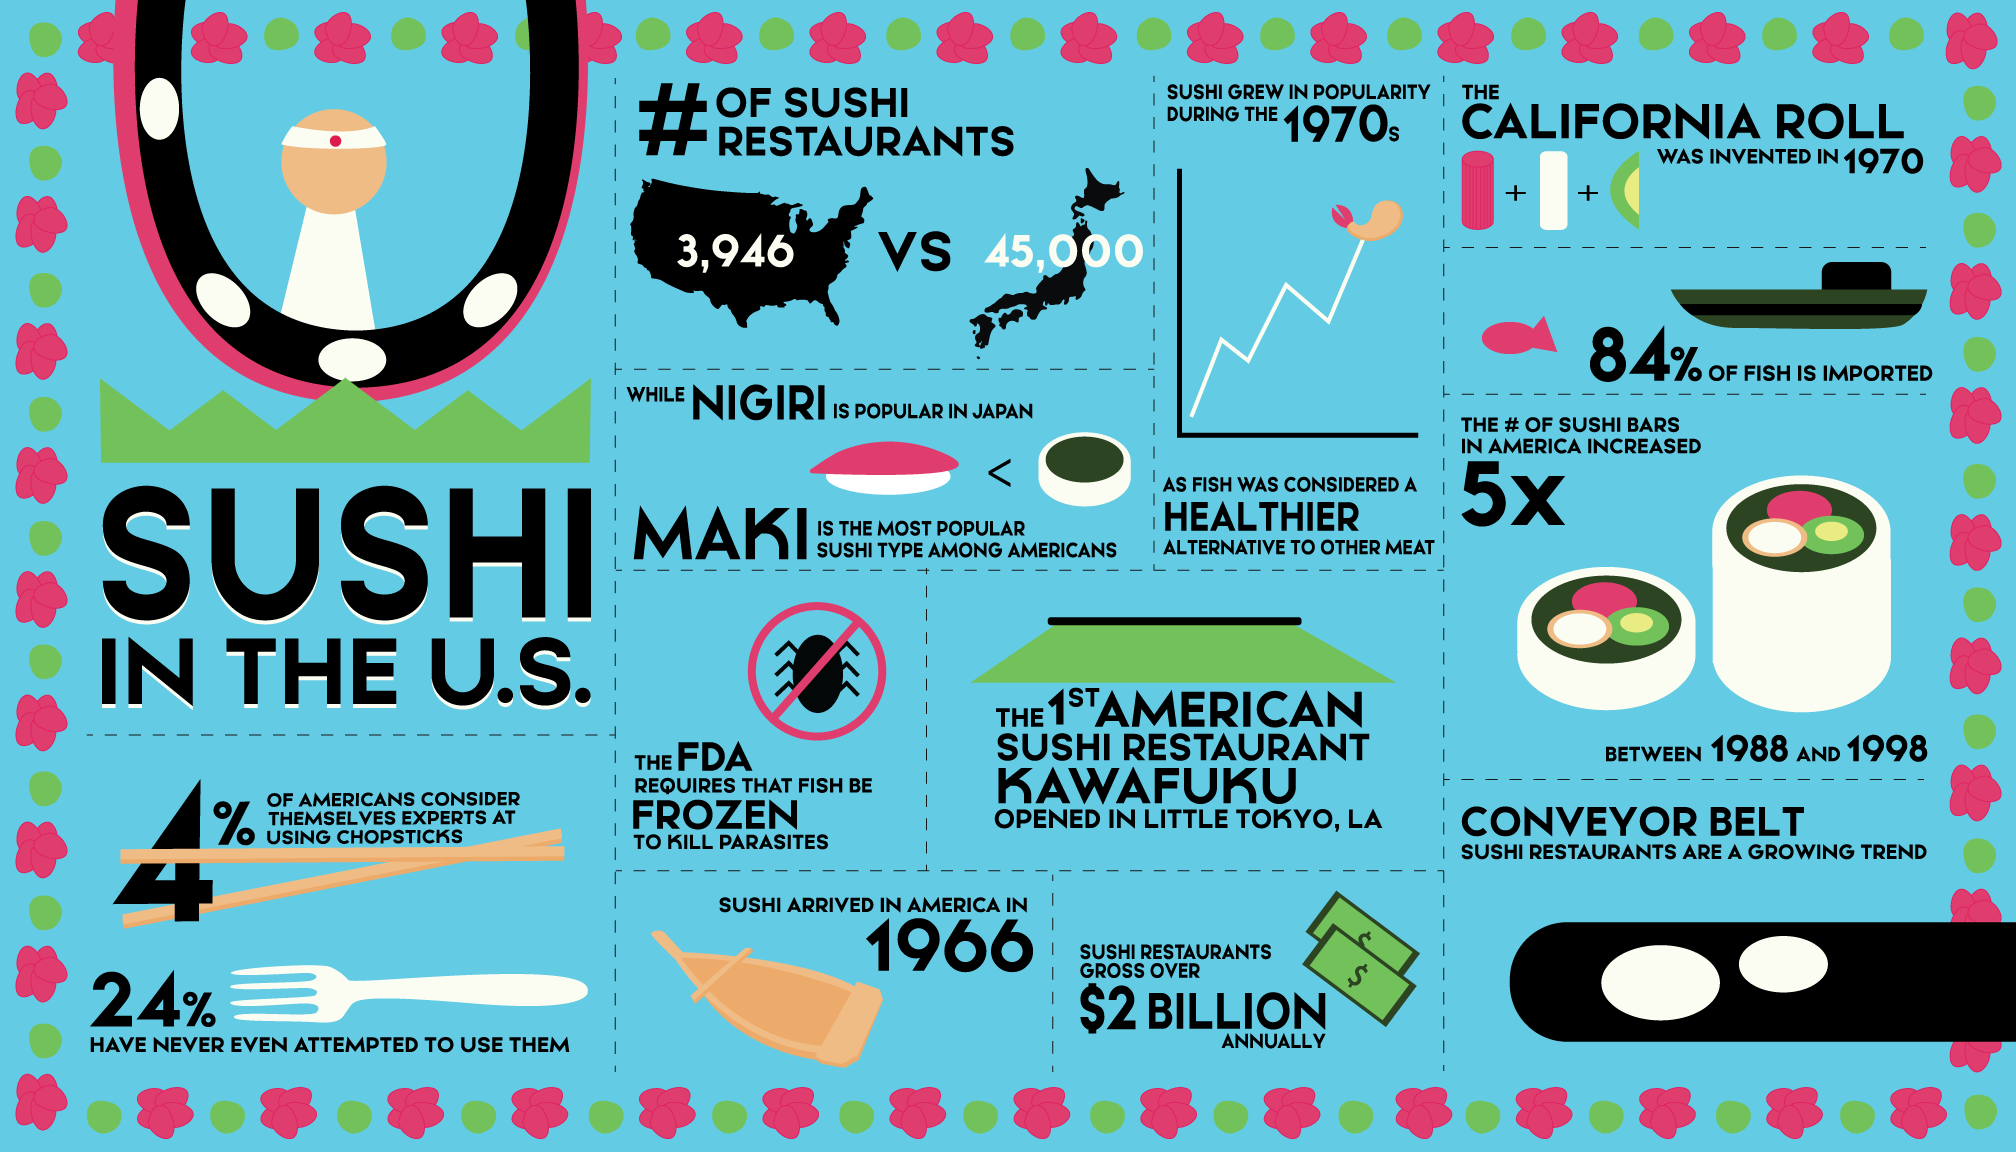 Sushi in the U.S.